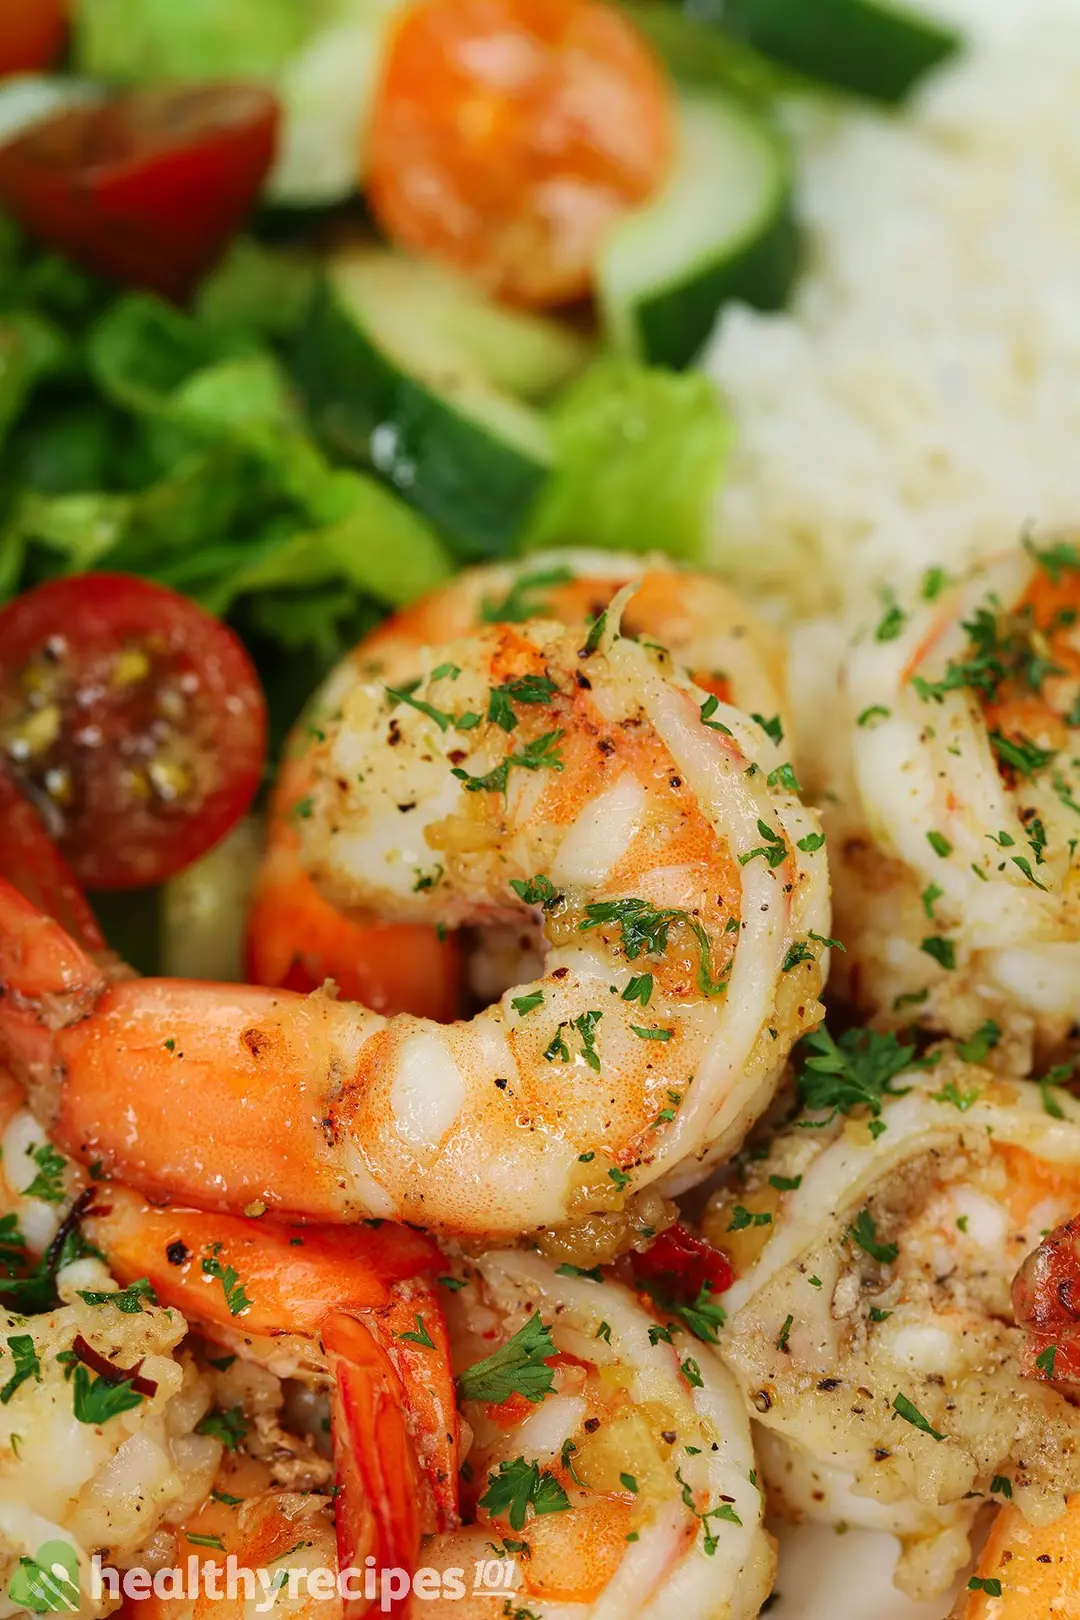 What Makes Our Garlic Shrimp Healthier